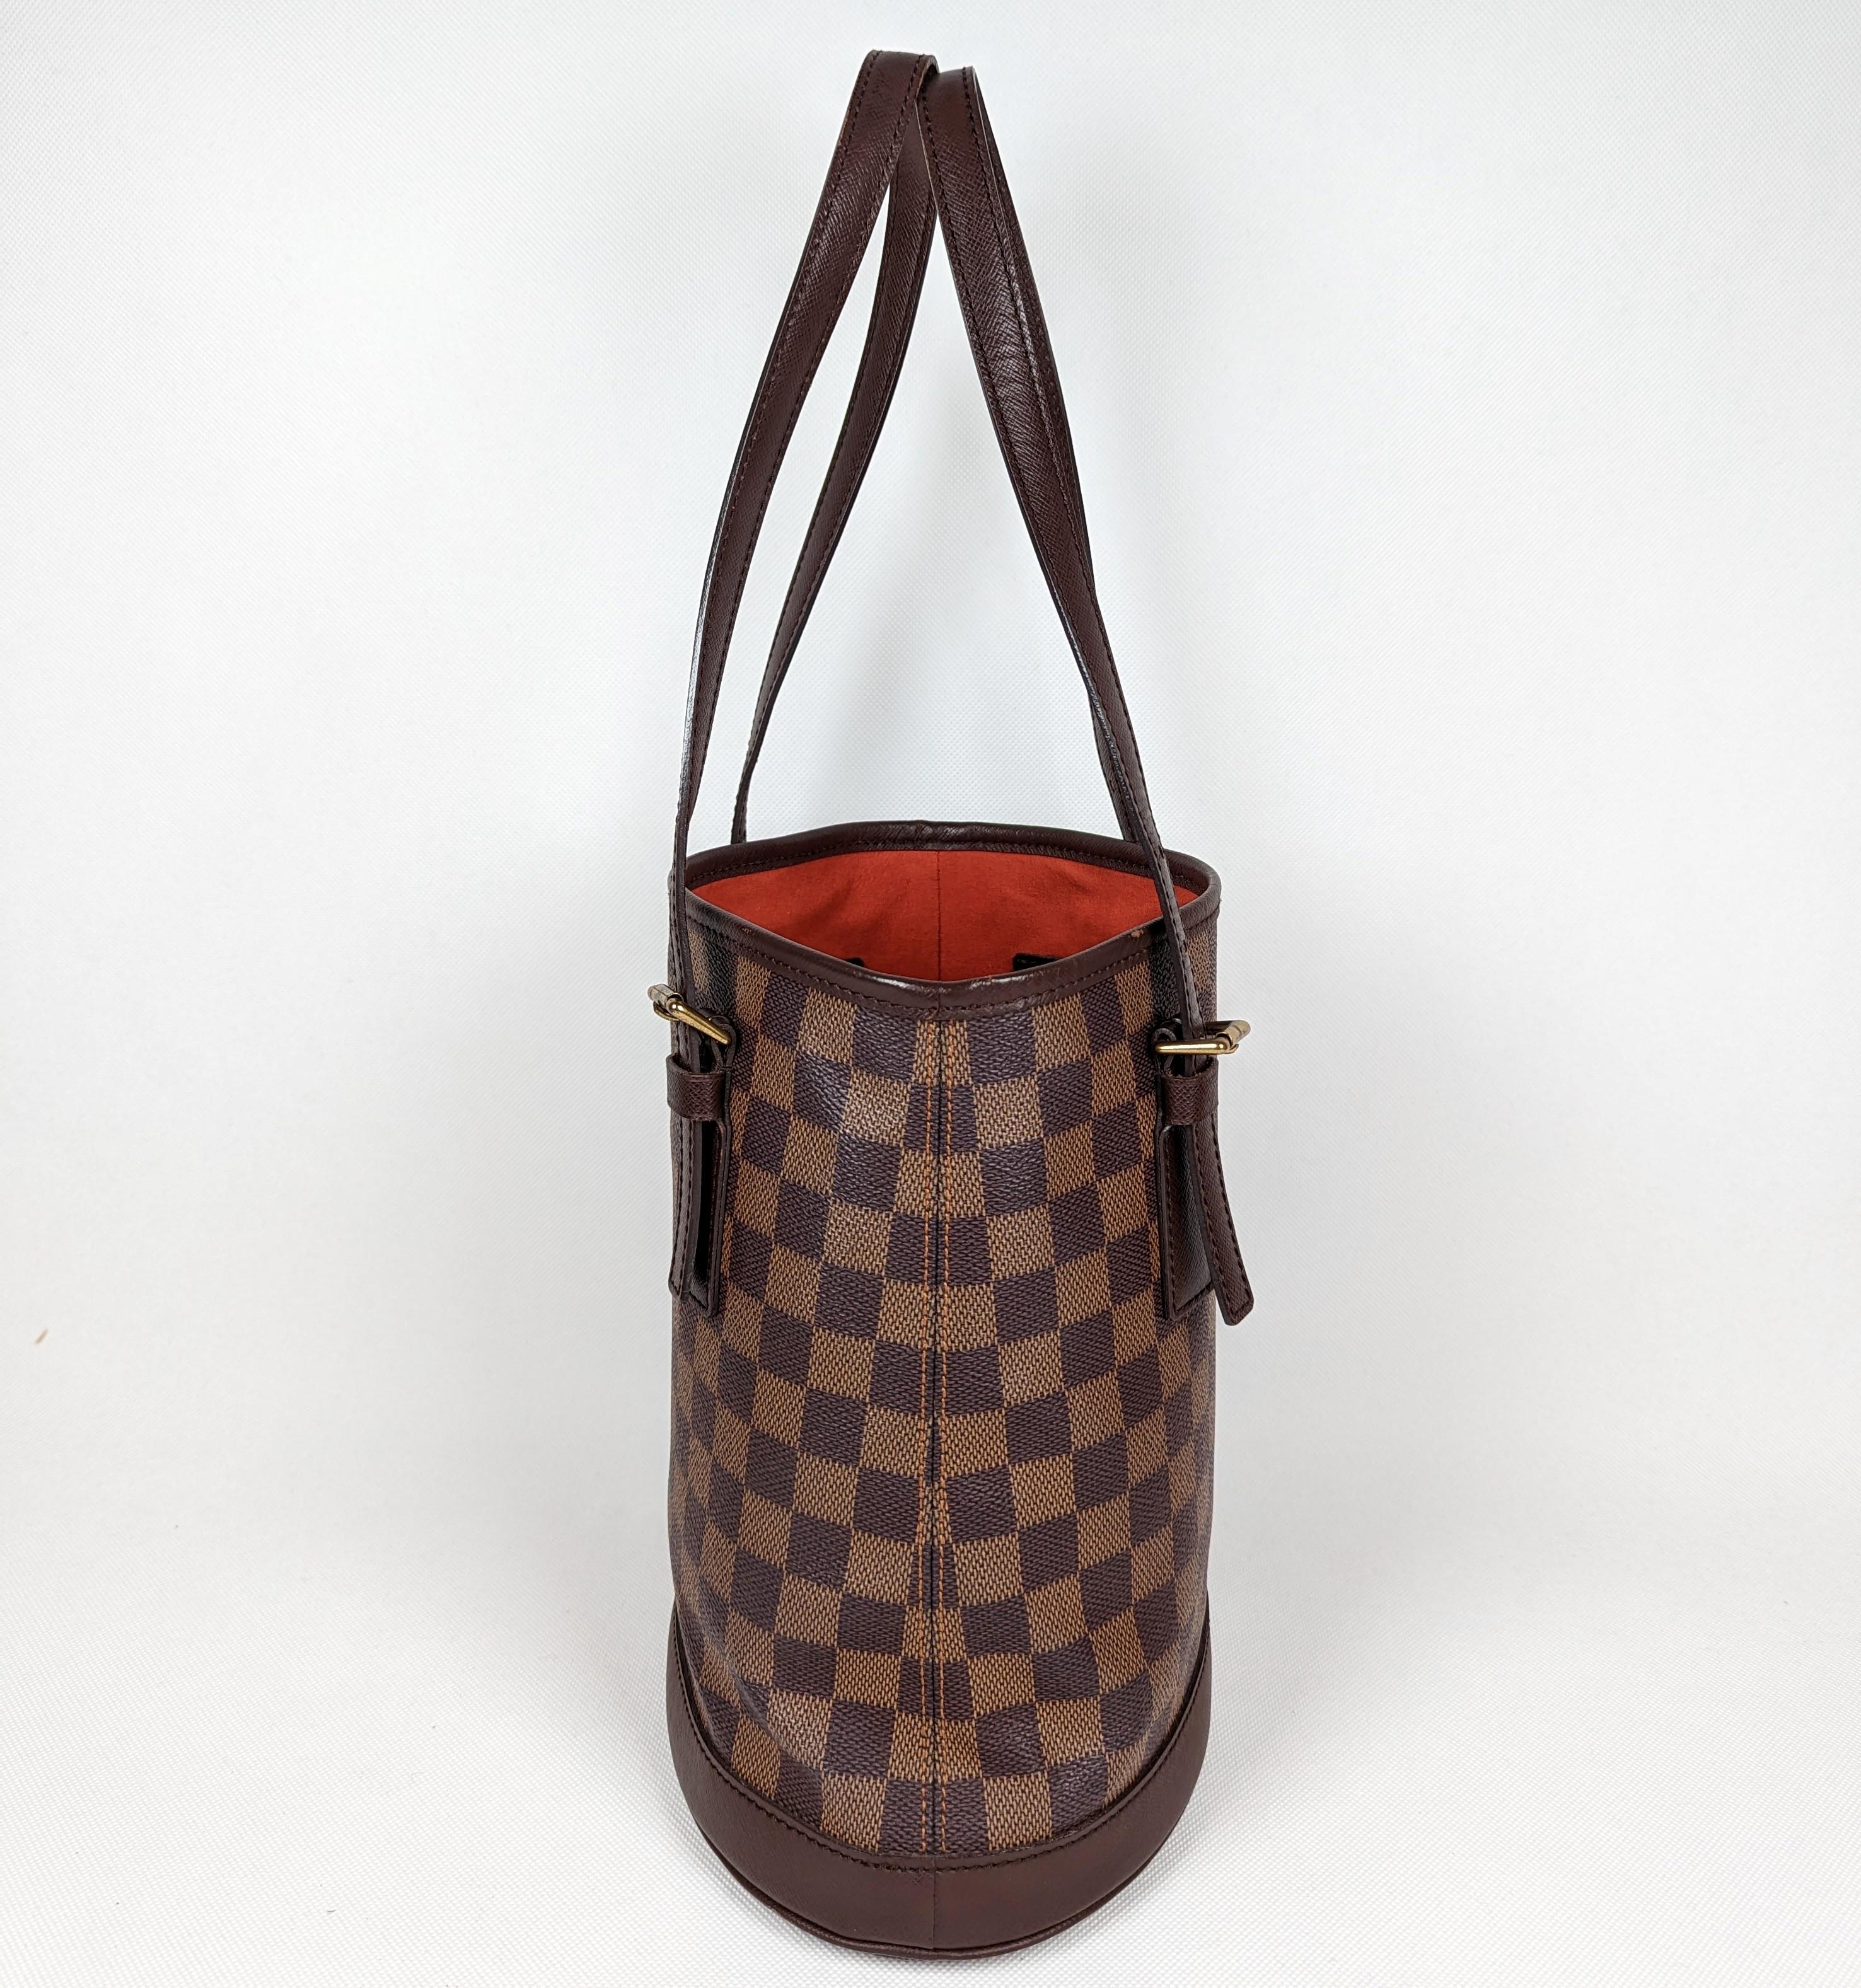 Women's Louis Vuitton Damier Marais Bucket Bag in Leather